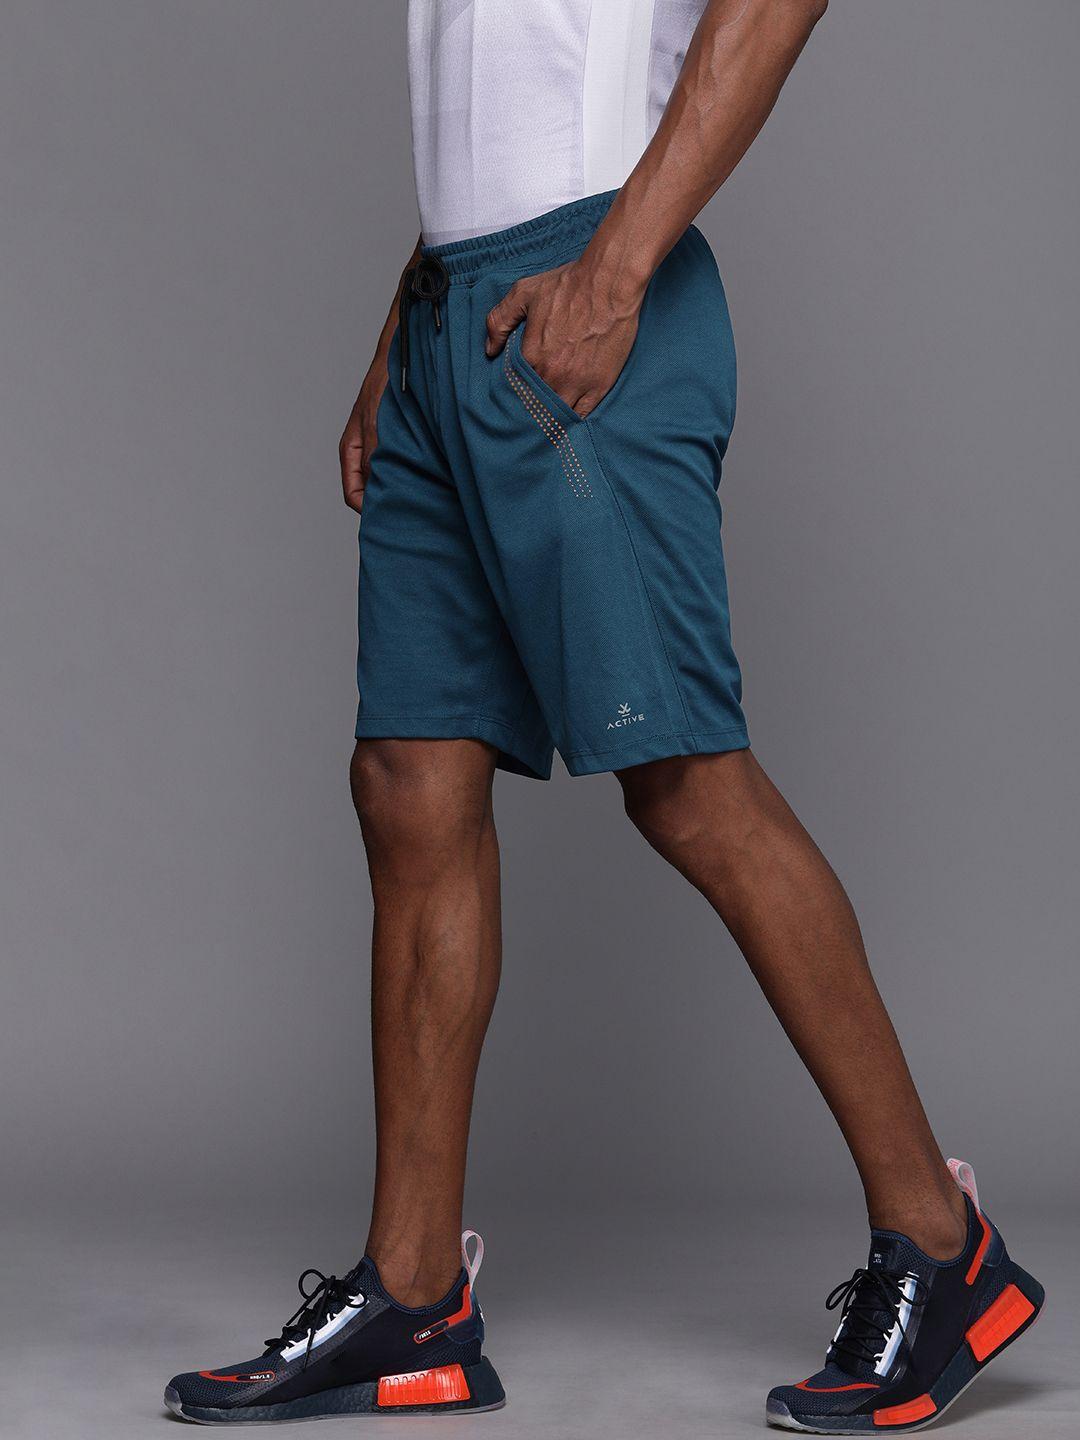 wrogn-active-men-teal-blue-slim-fit-sports-shorts